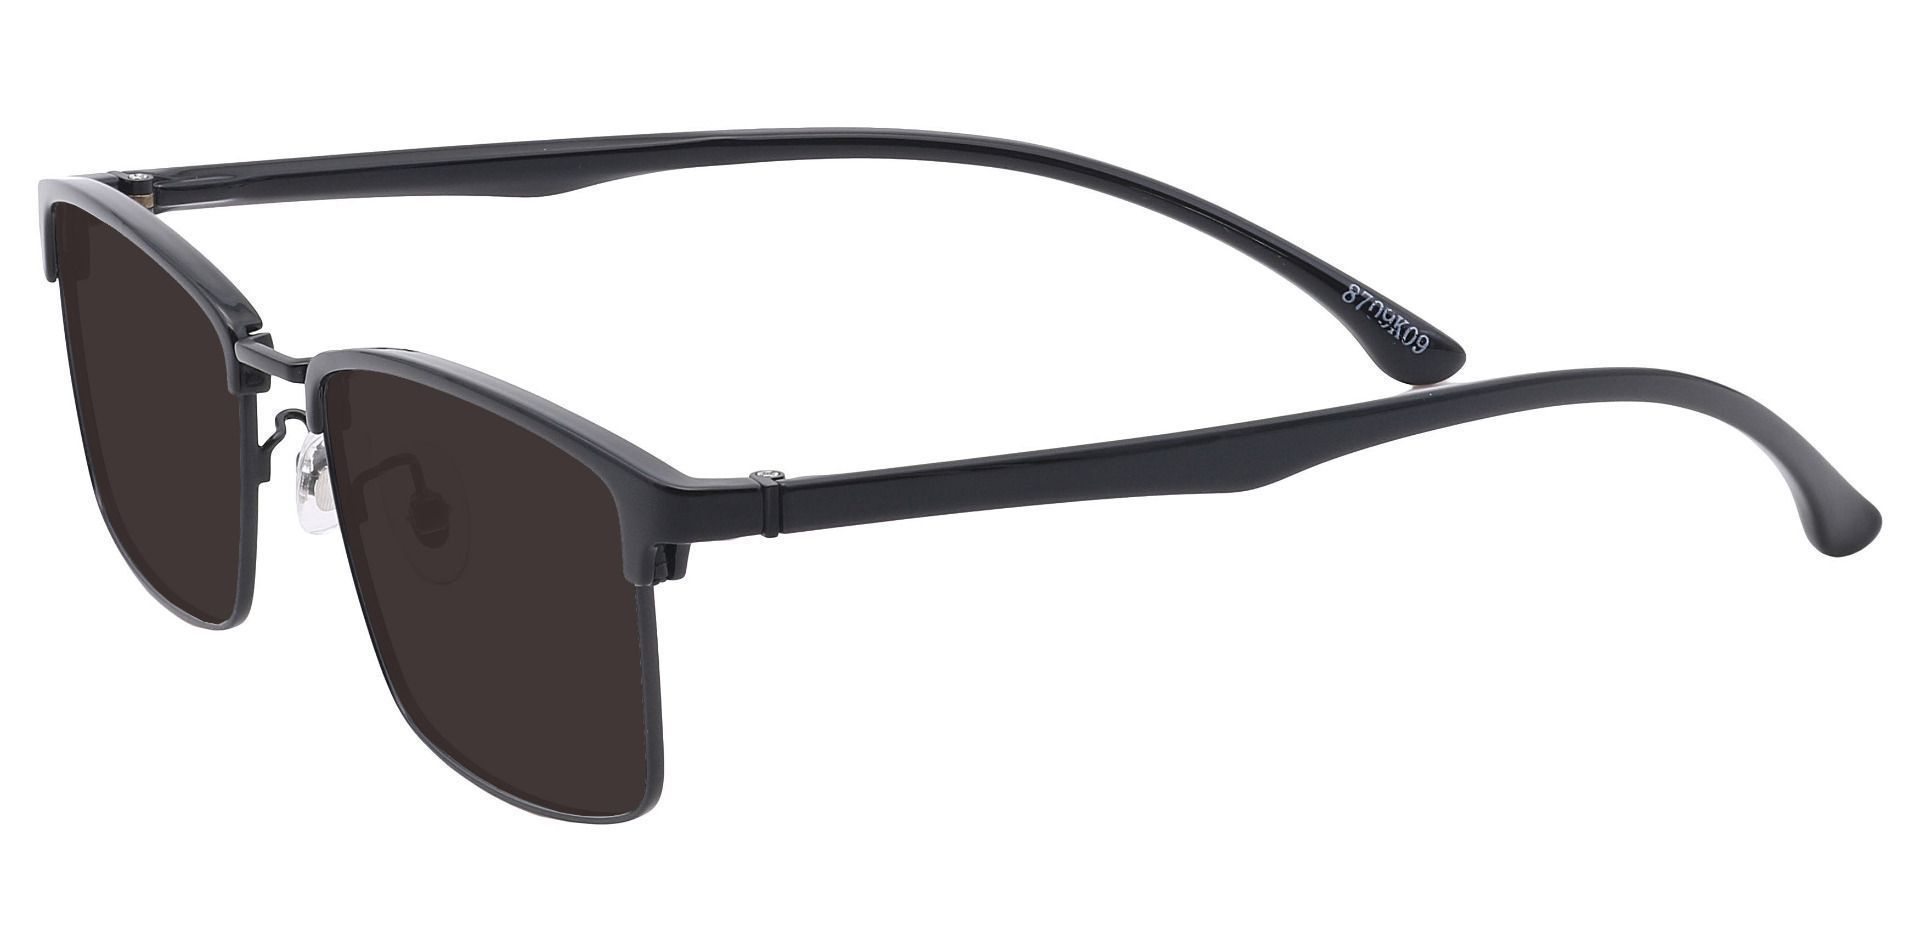 Young Browline Prescription Sunglasses - Black Frame With Gray Lenses